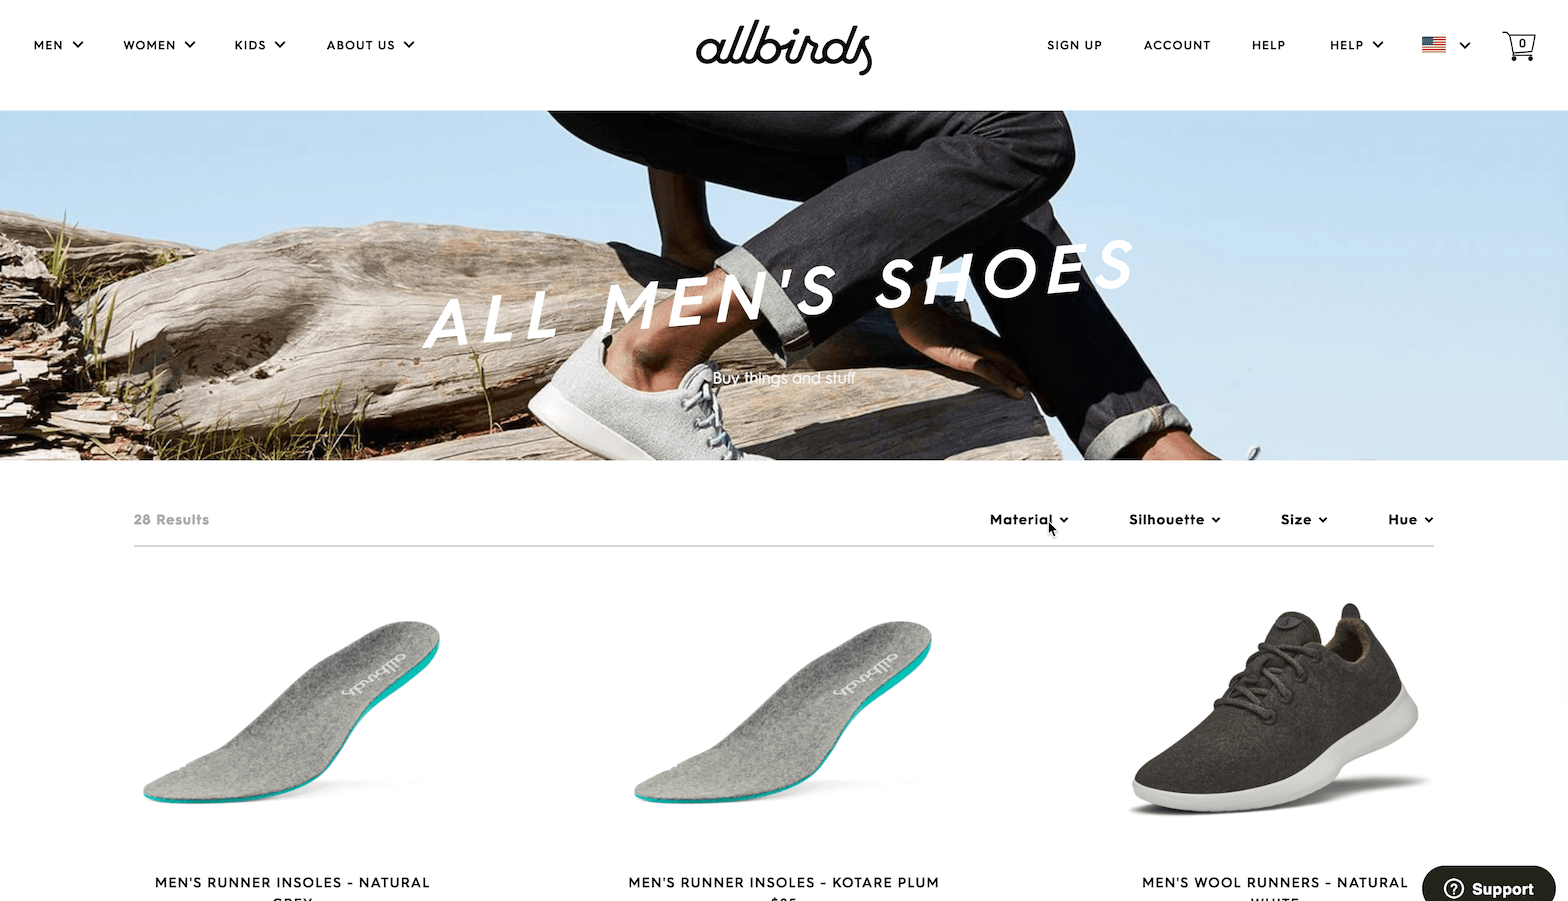 allbird products